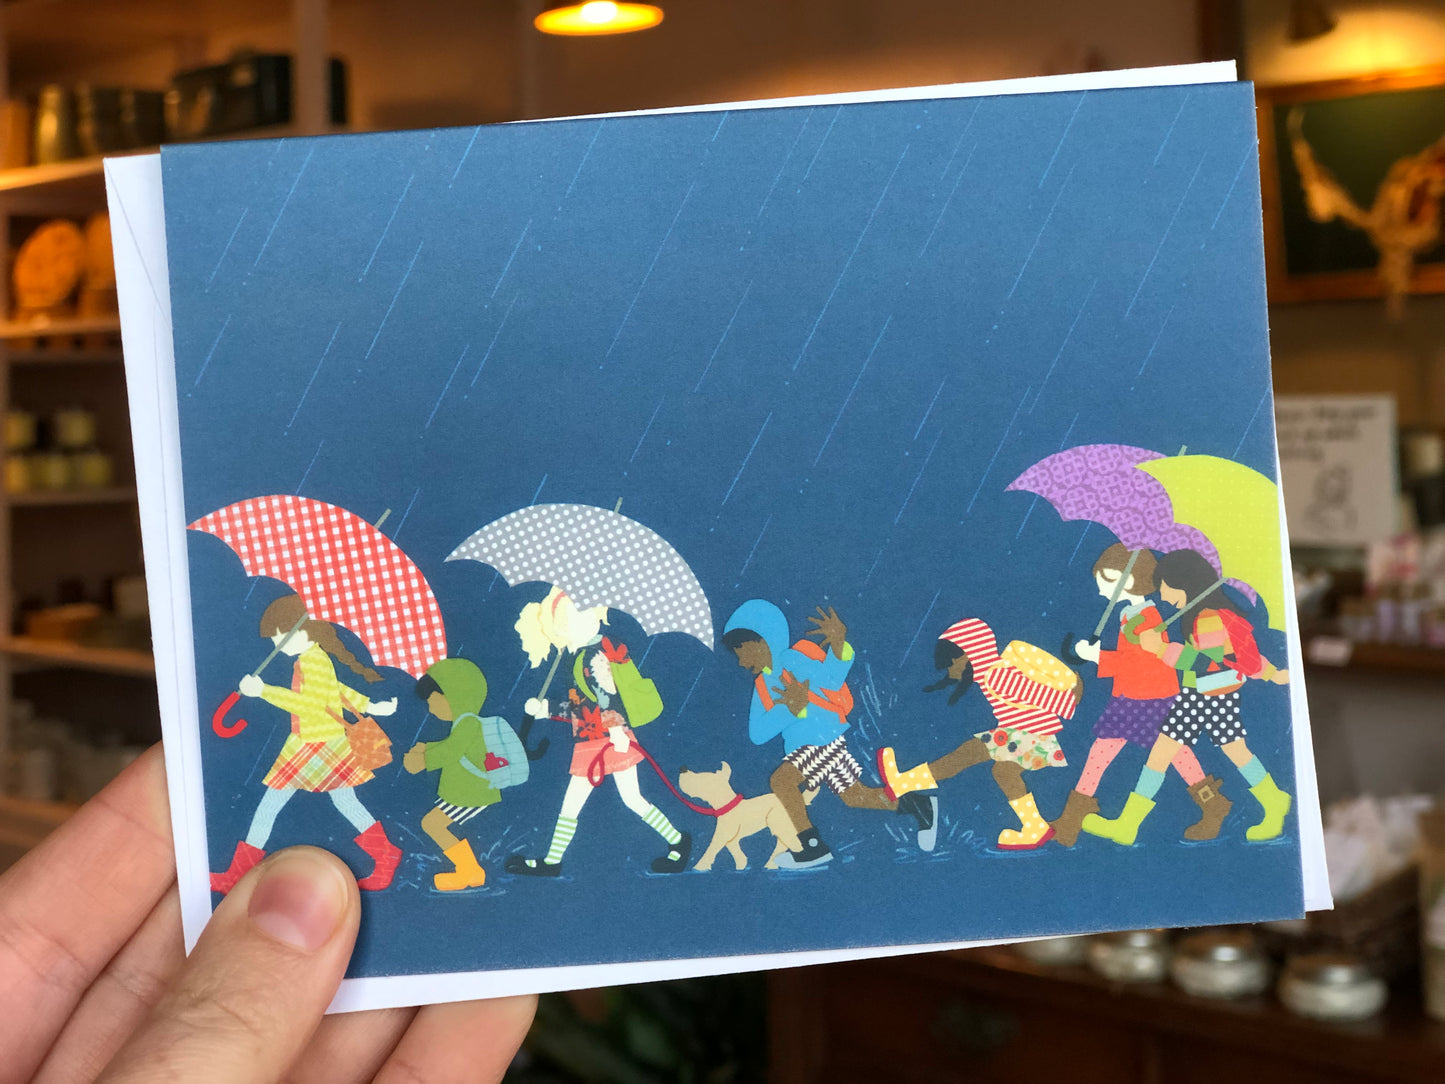 Walking Home in the Rain Card